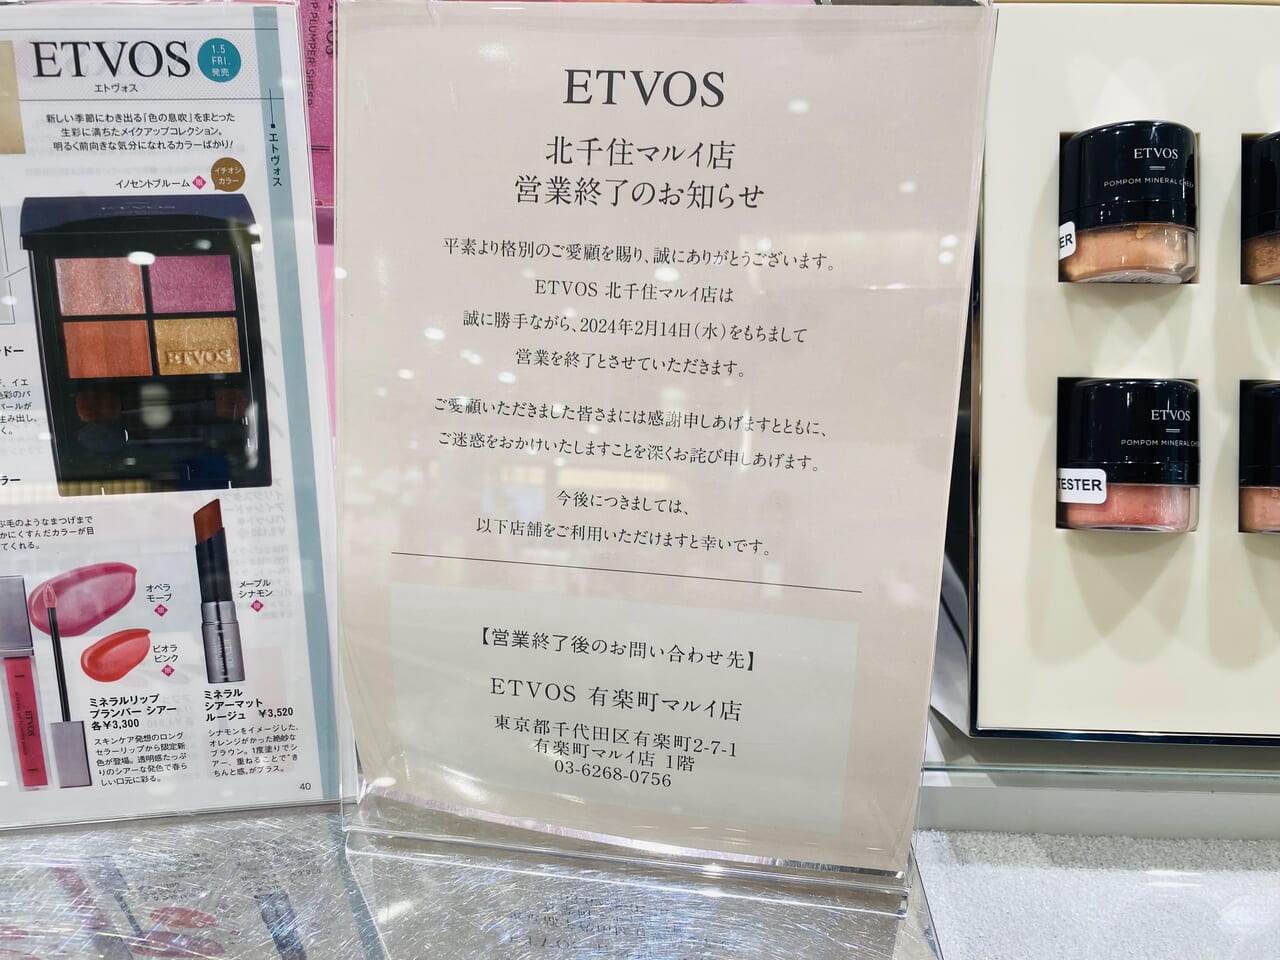 ETVOS北千住マルイ2月14日閉店